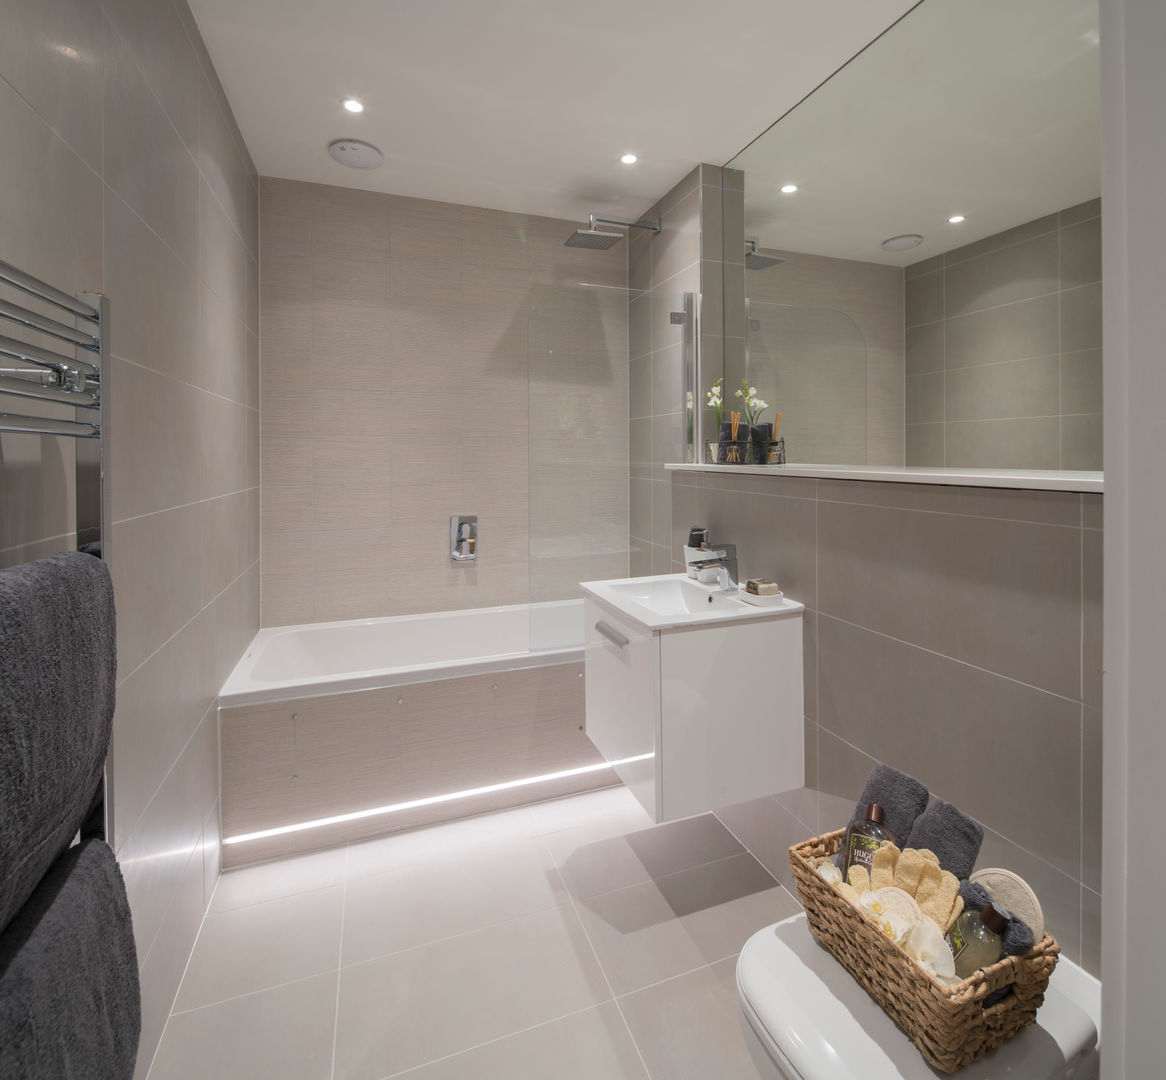 Station Rd, New Barnet Jigsaw Interior Architecture & Design Bagno moderno luxury,bathroom,tiles,mirror,bronze,london,show home